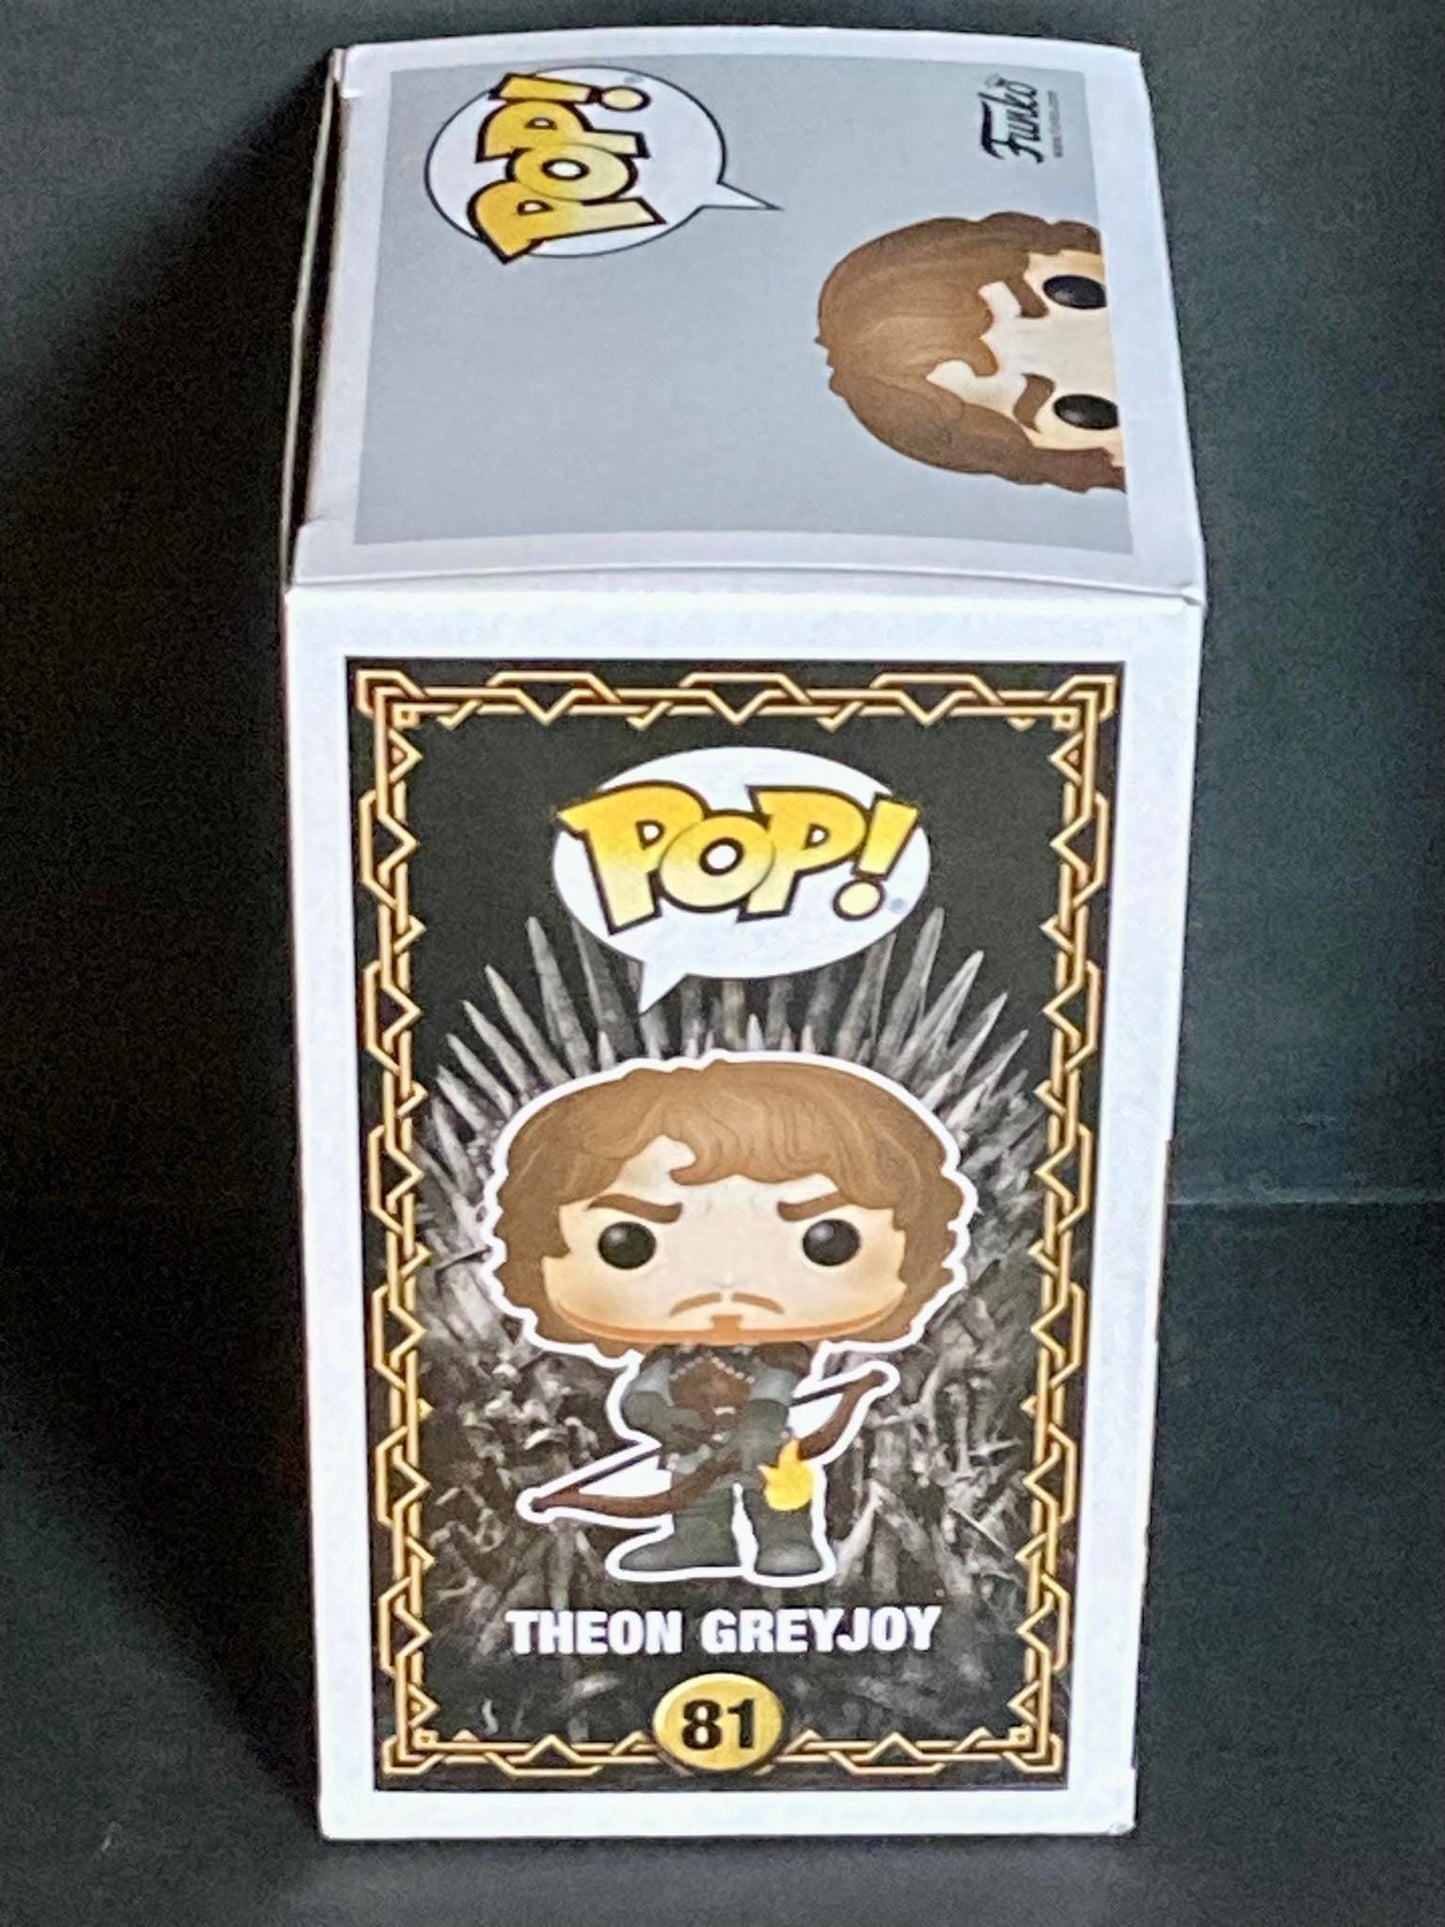 Figurine Pop Game of Thrones #81 Theon Greyjoy